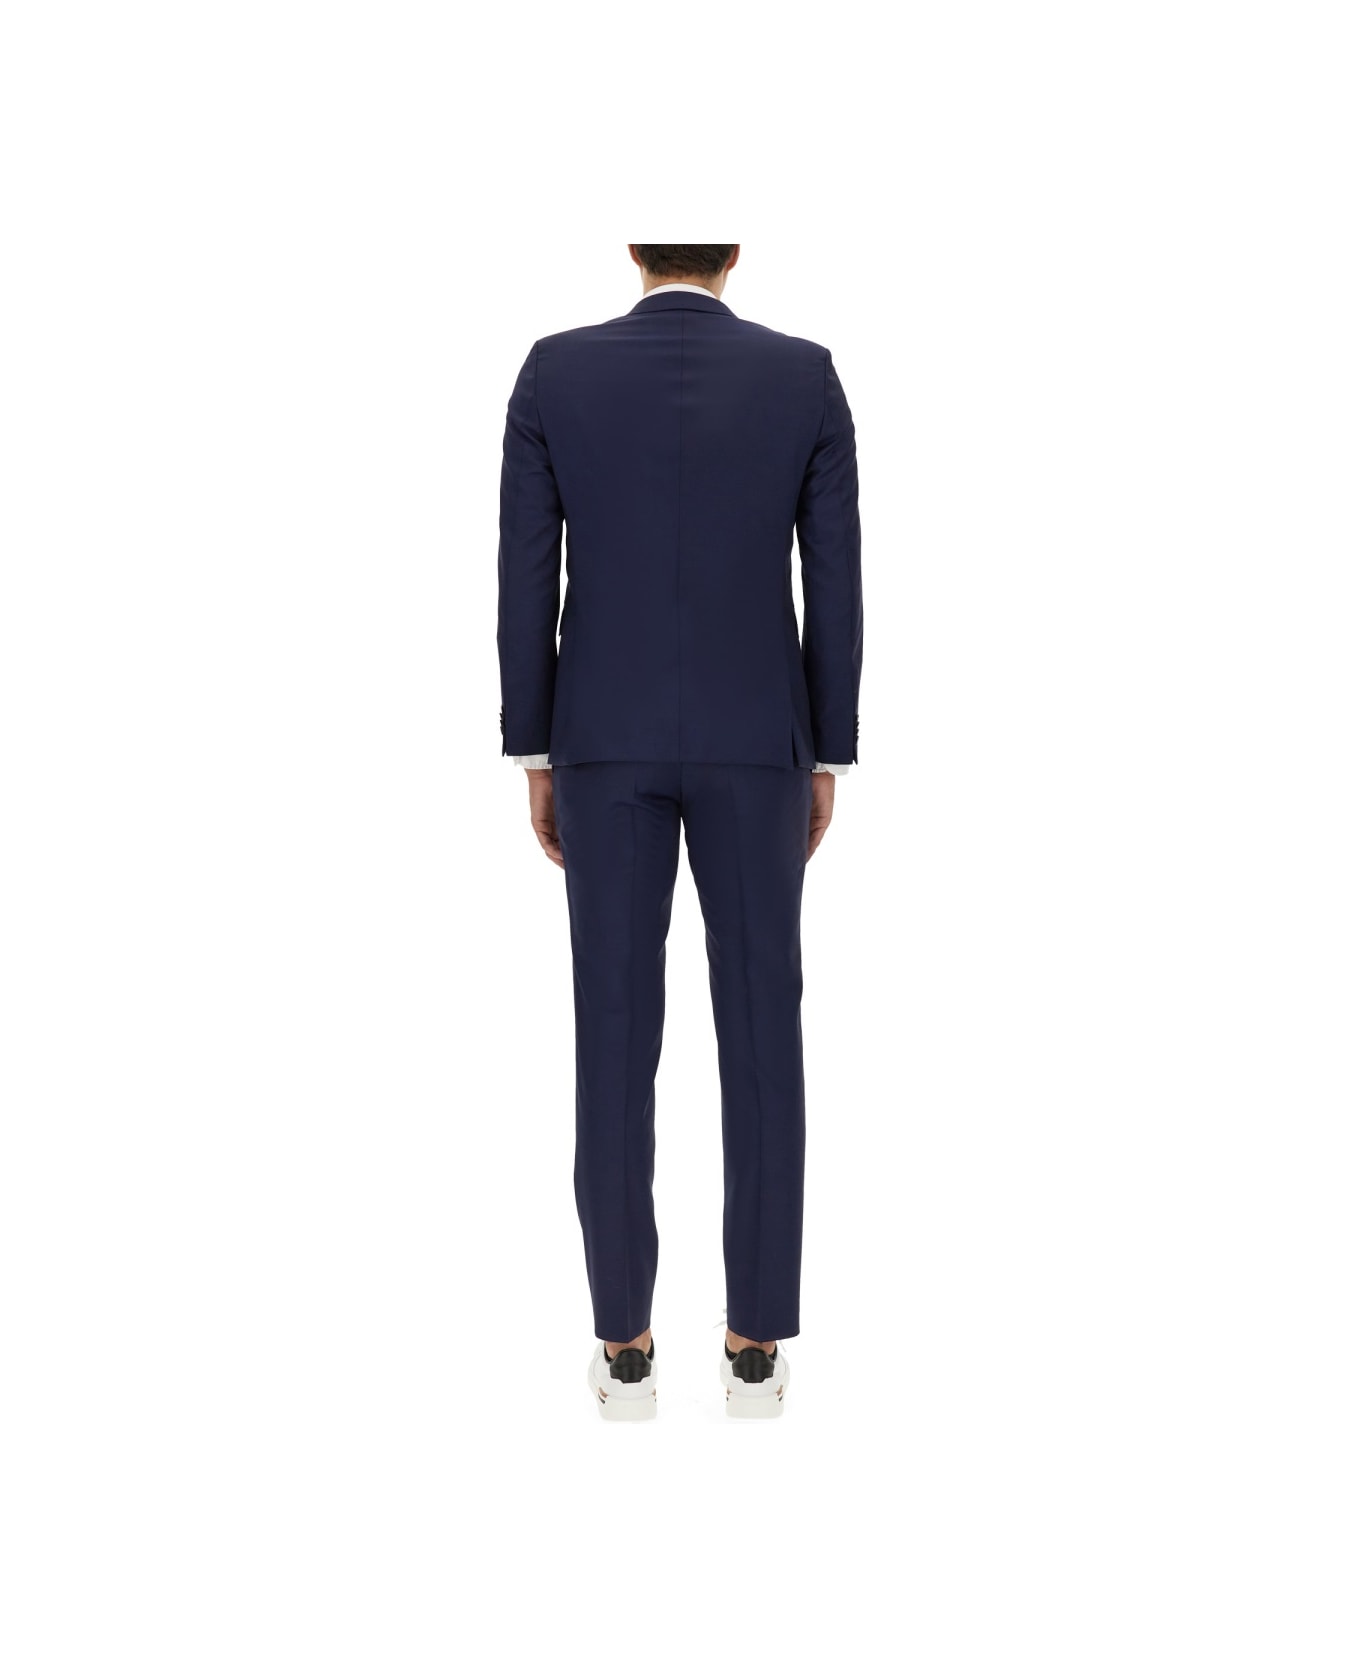 Hugo Boss H-reymond Suit - BLUE スーツ